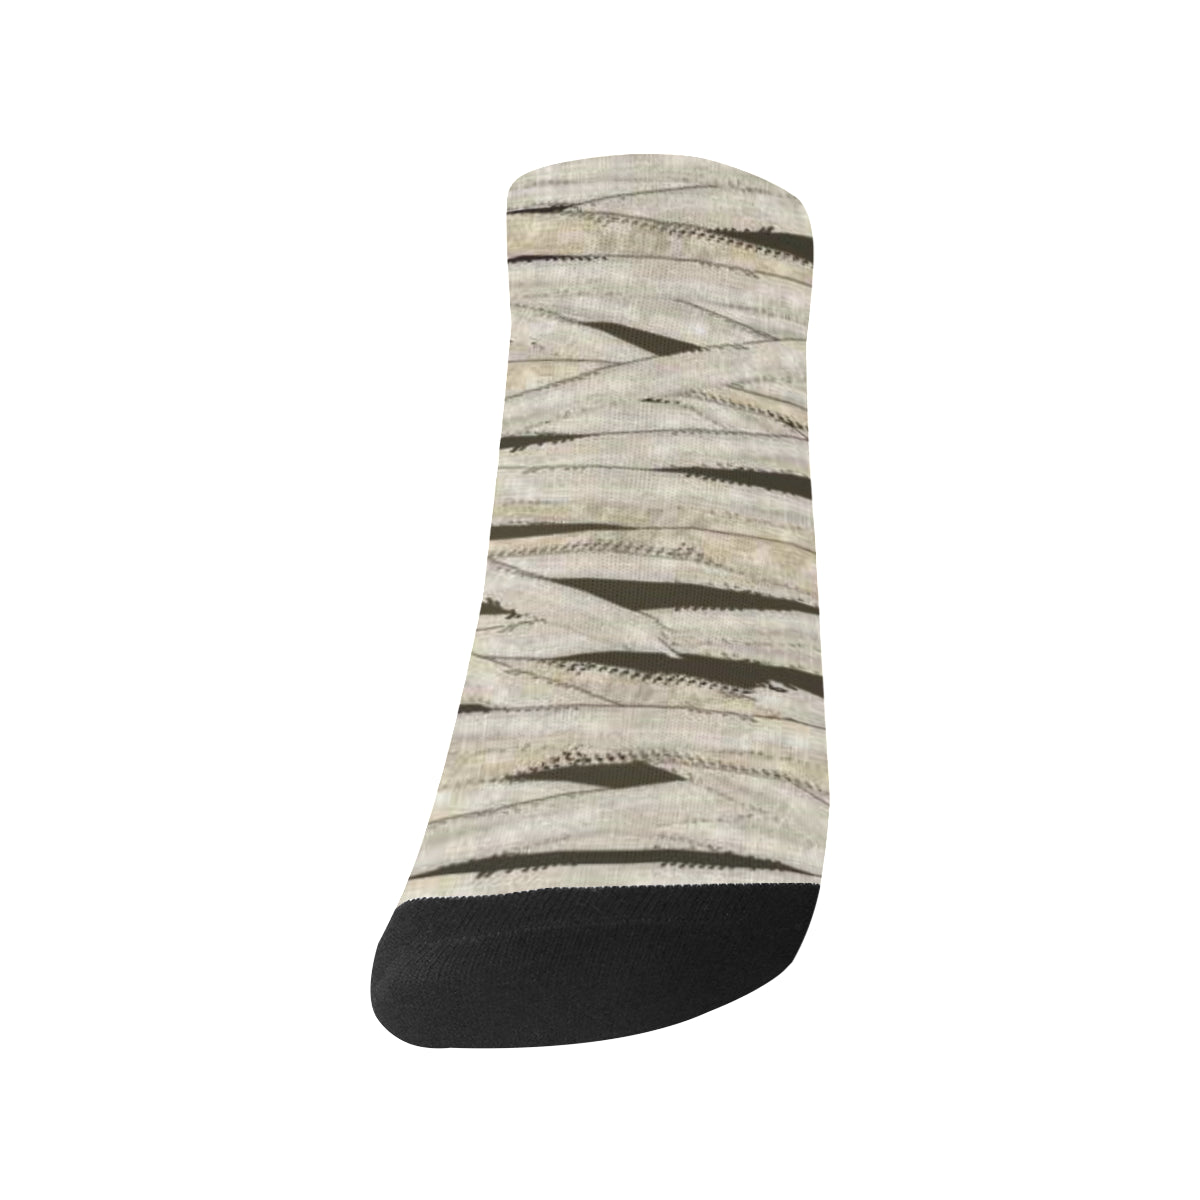 Mummy Wrap Men's Ankle Socks